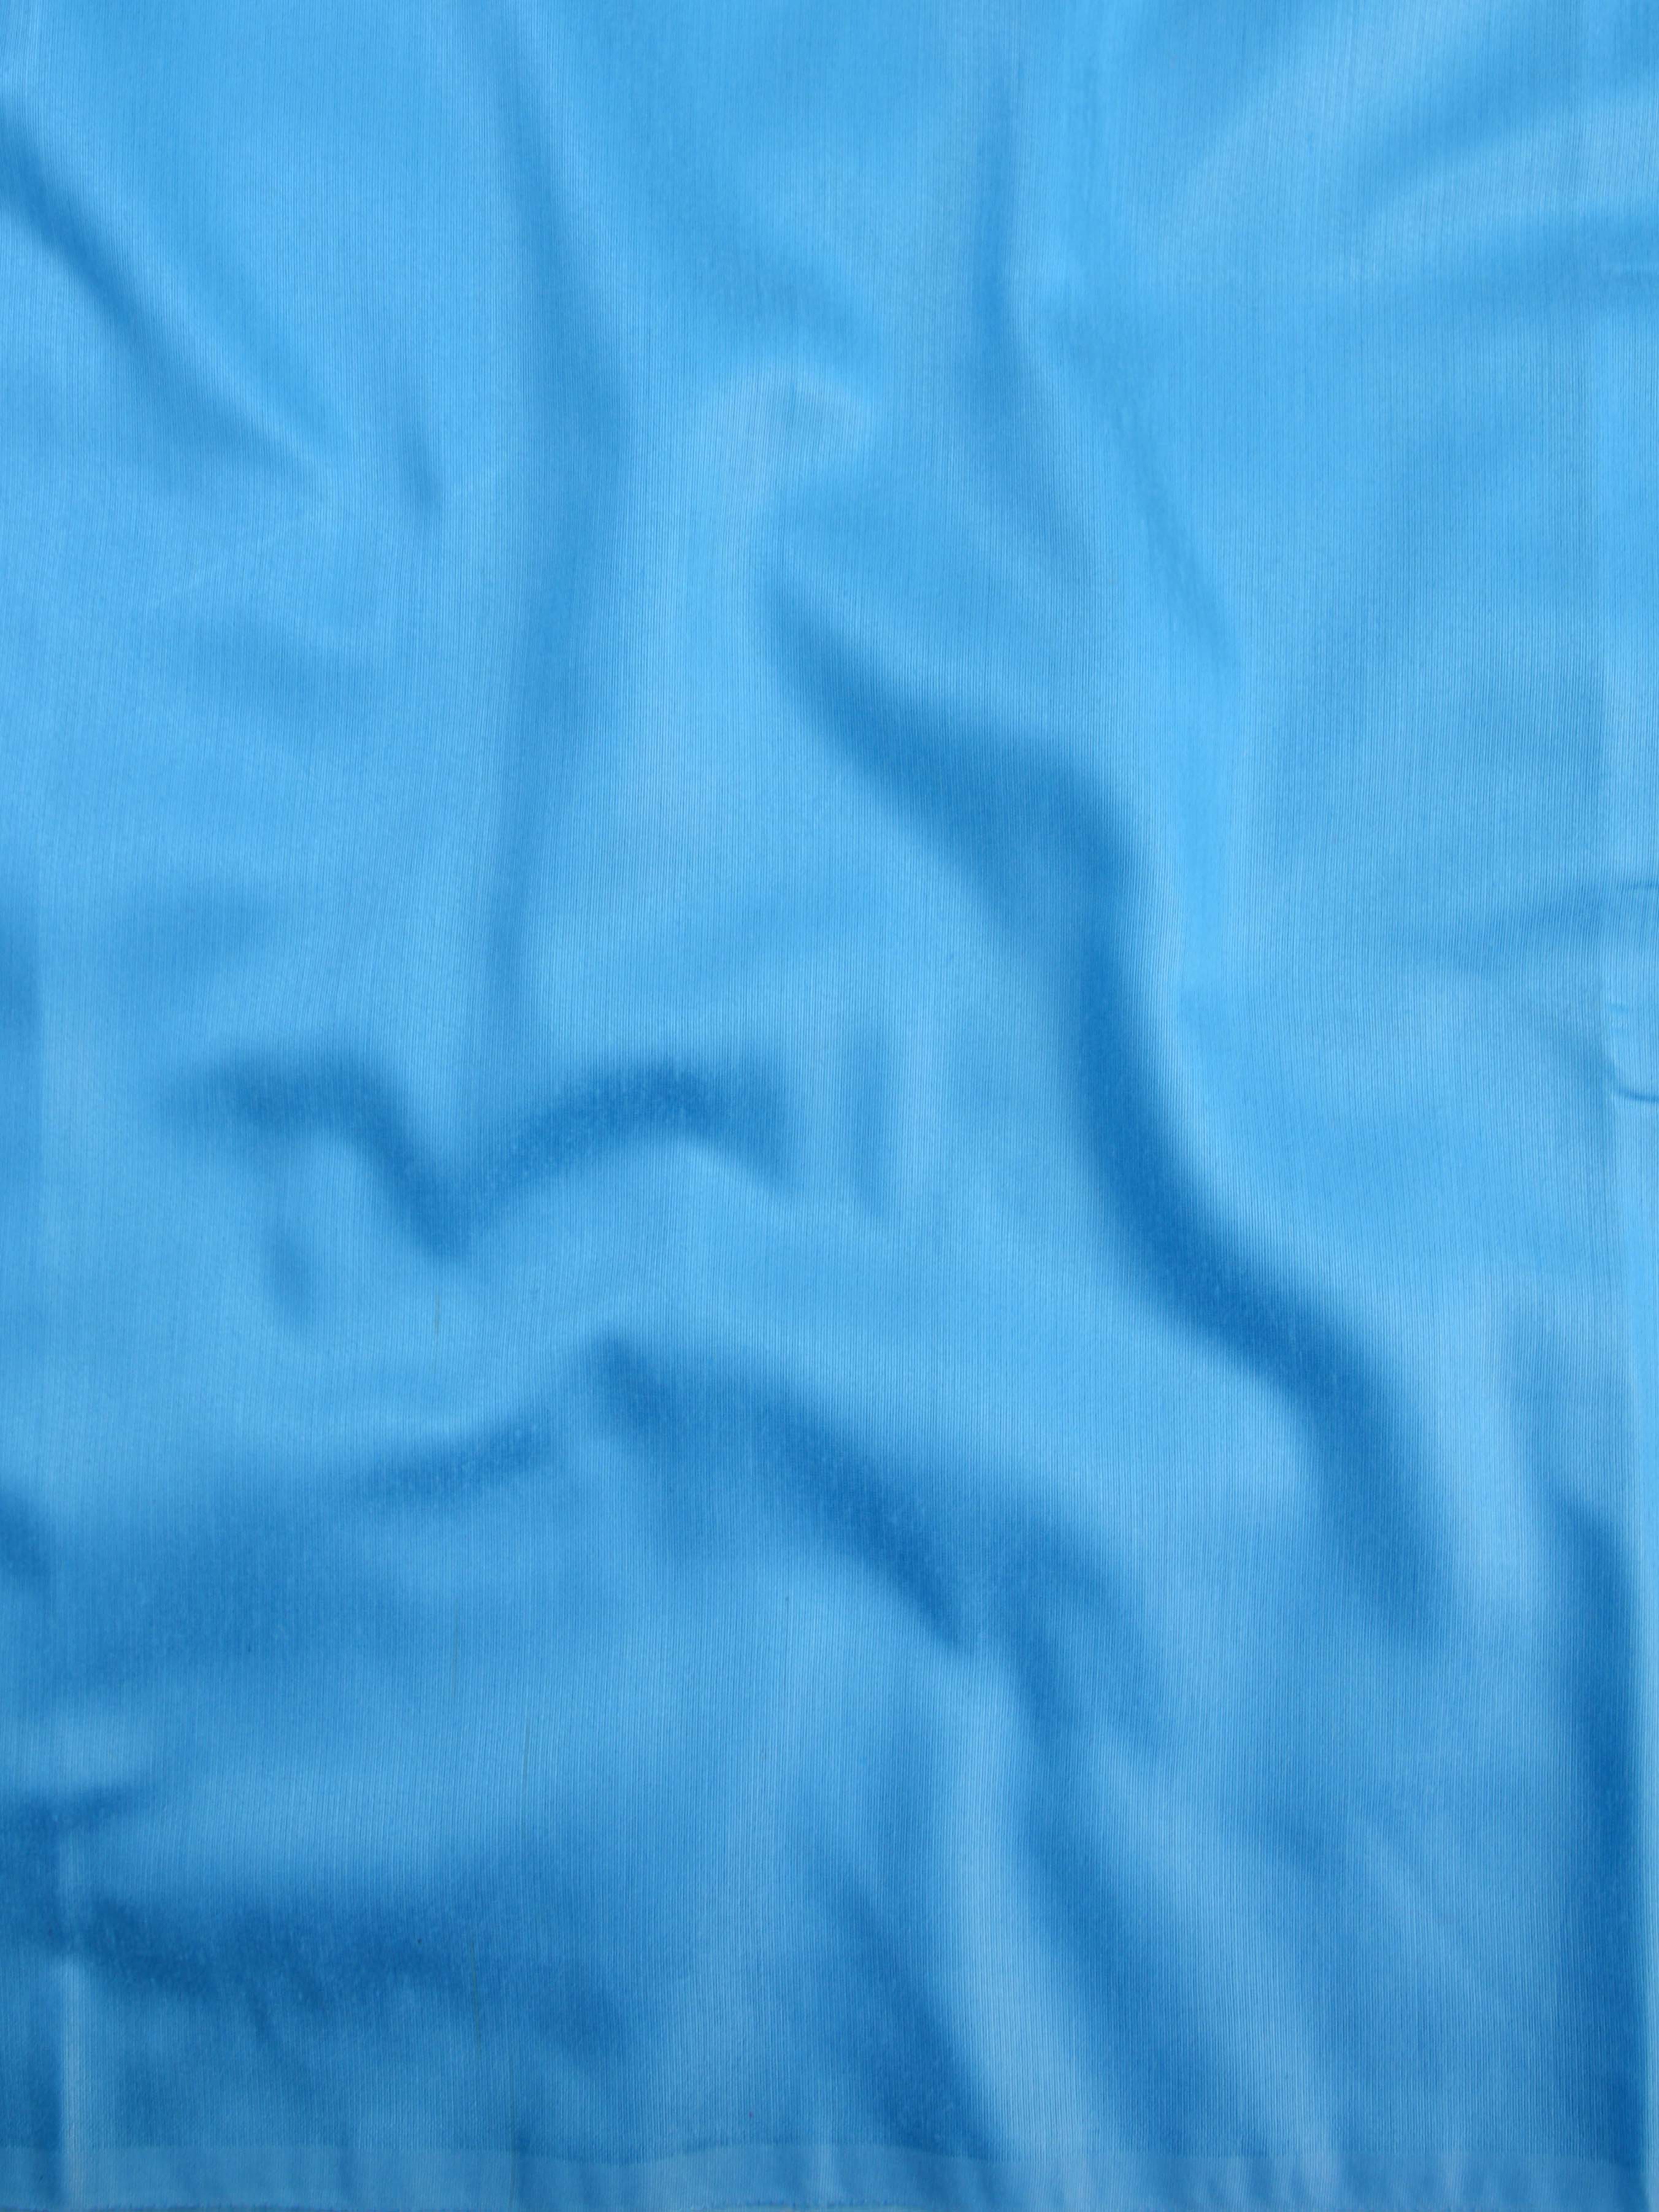 Banarasee Cotton Silk Salwar Kameez Fabric With Zari & Resham Work-Blue